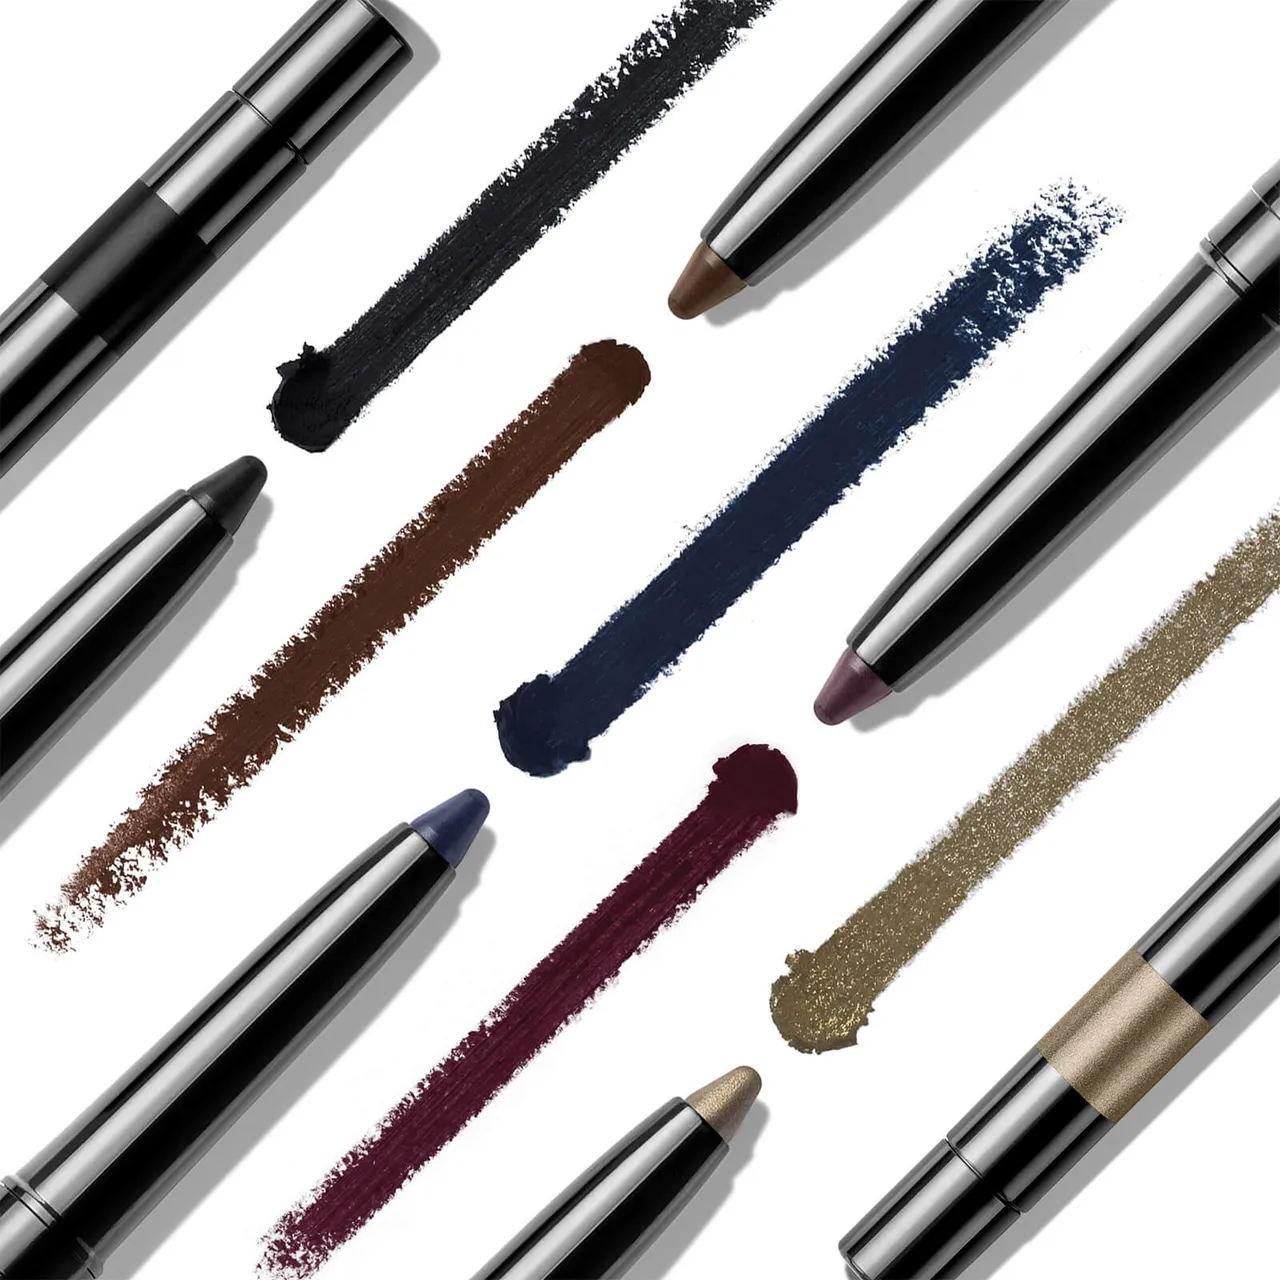 Guerlain The Eye Pencil Intense Colour Long-Lasting and Waterproof 0.035g (Various Shades) - 02 Brown Earth